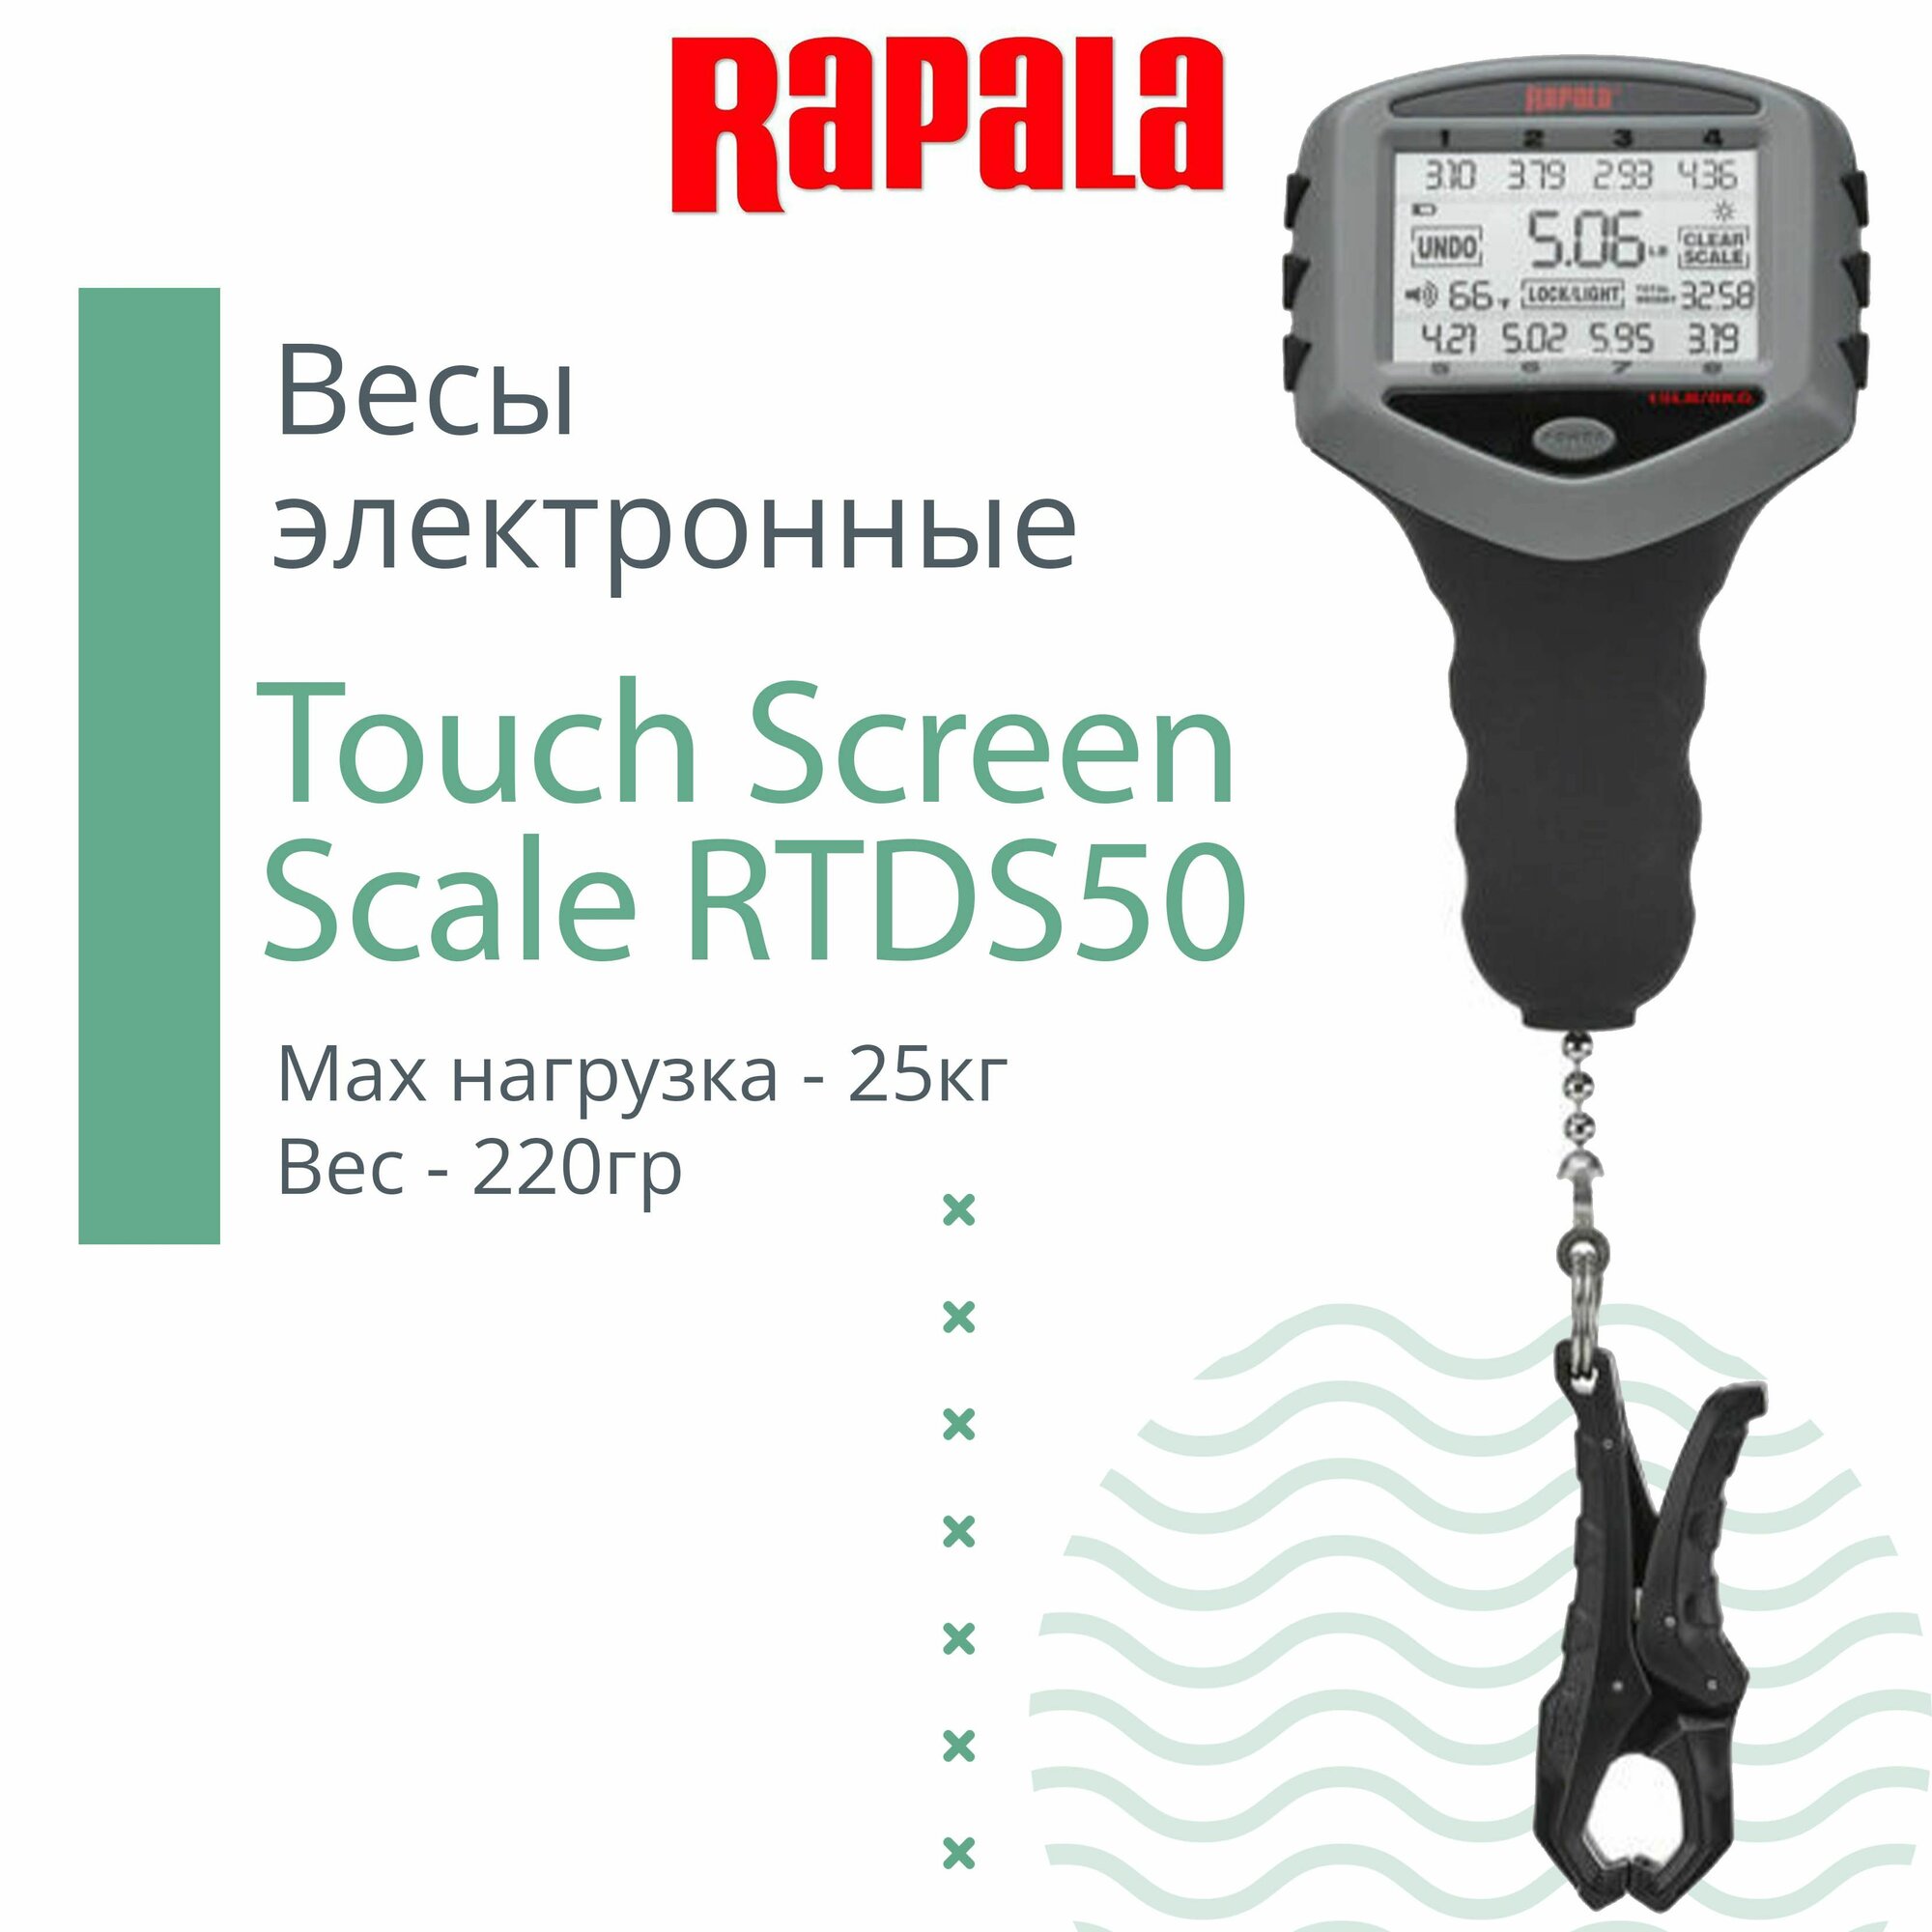 Весы рыболовные электронные Rapala Touch Screen Scale RTDS50 с сенсорным экраном и памятью, максимальная нагрузка 25 кг